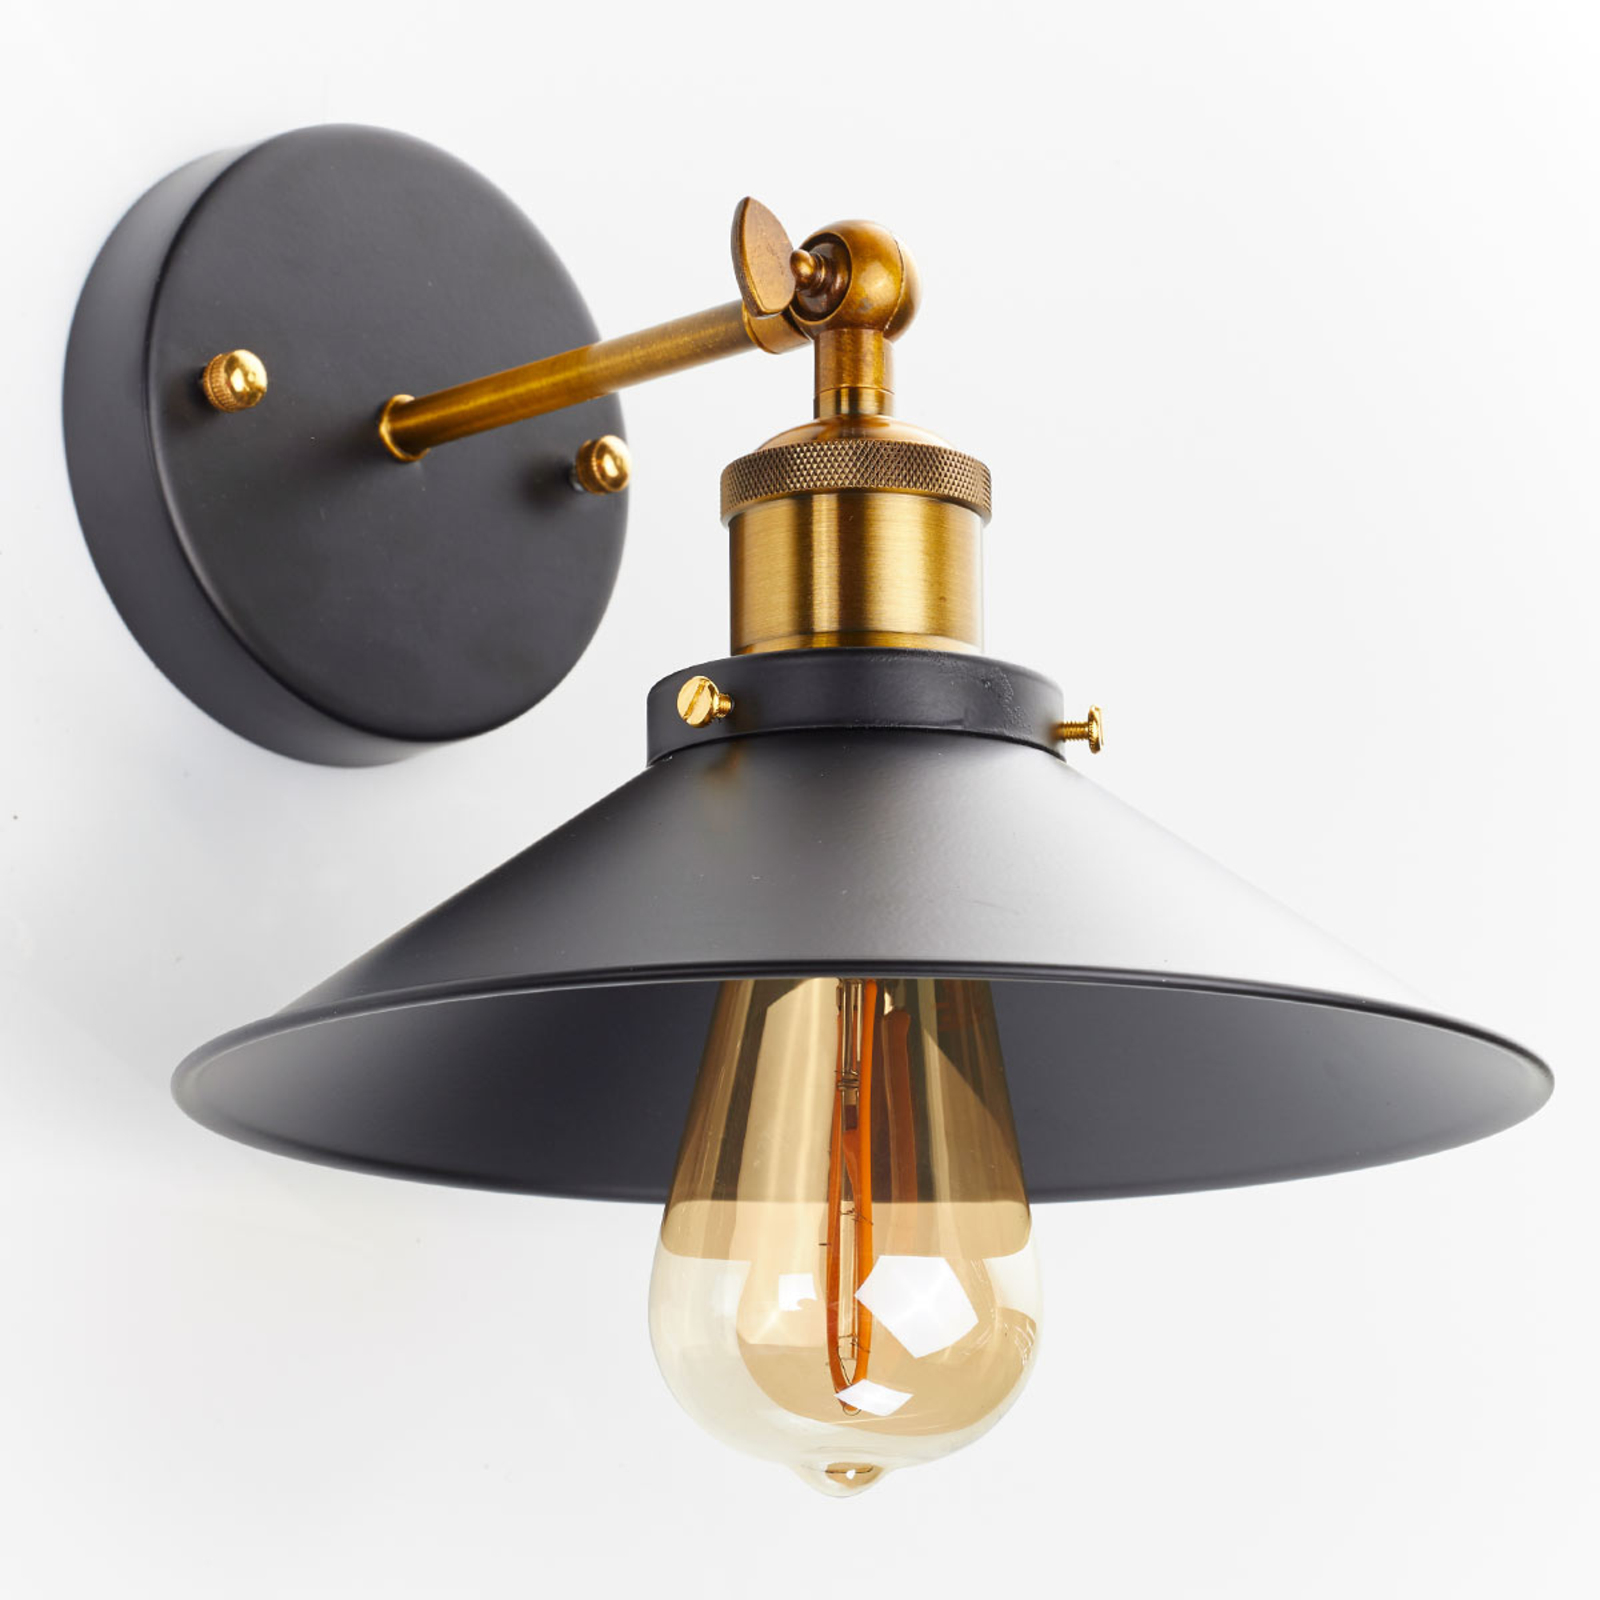 Wandlamp Viktor in industrieel ontwerp